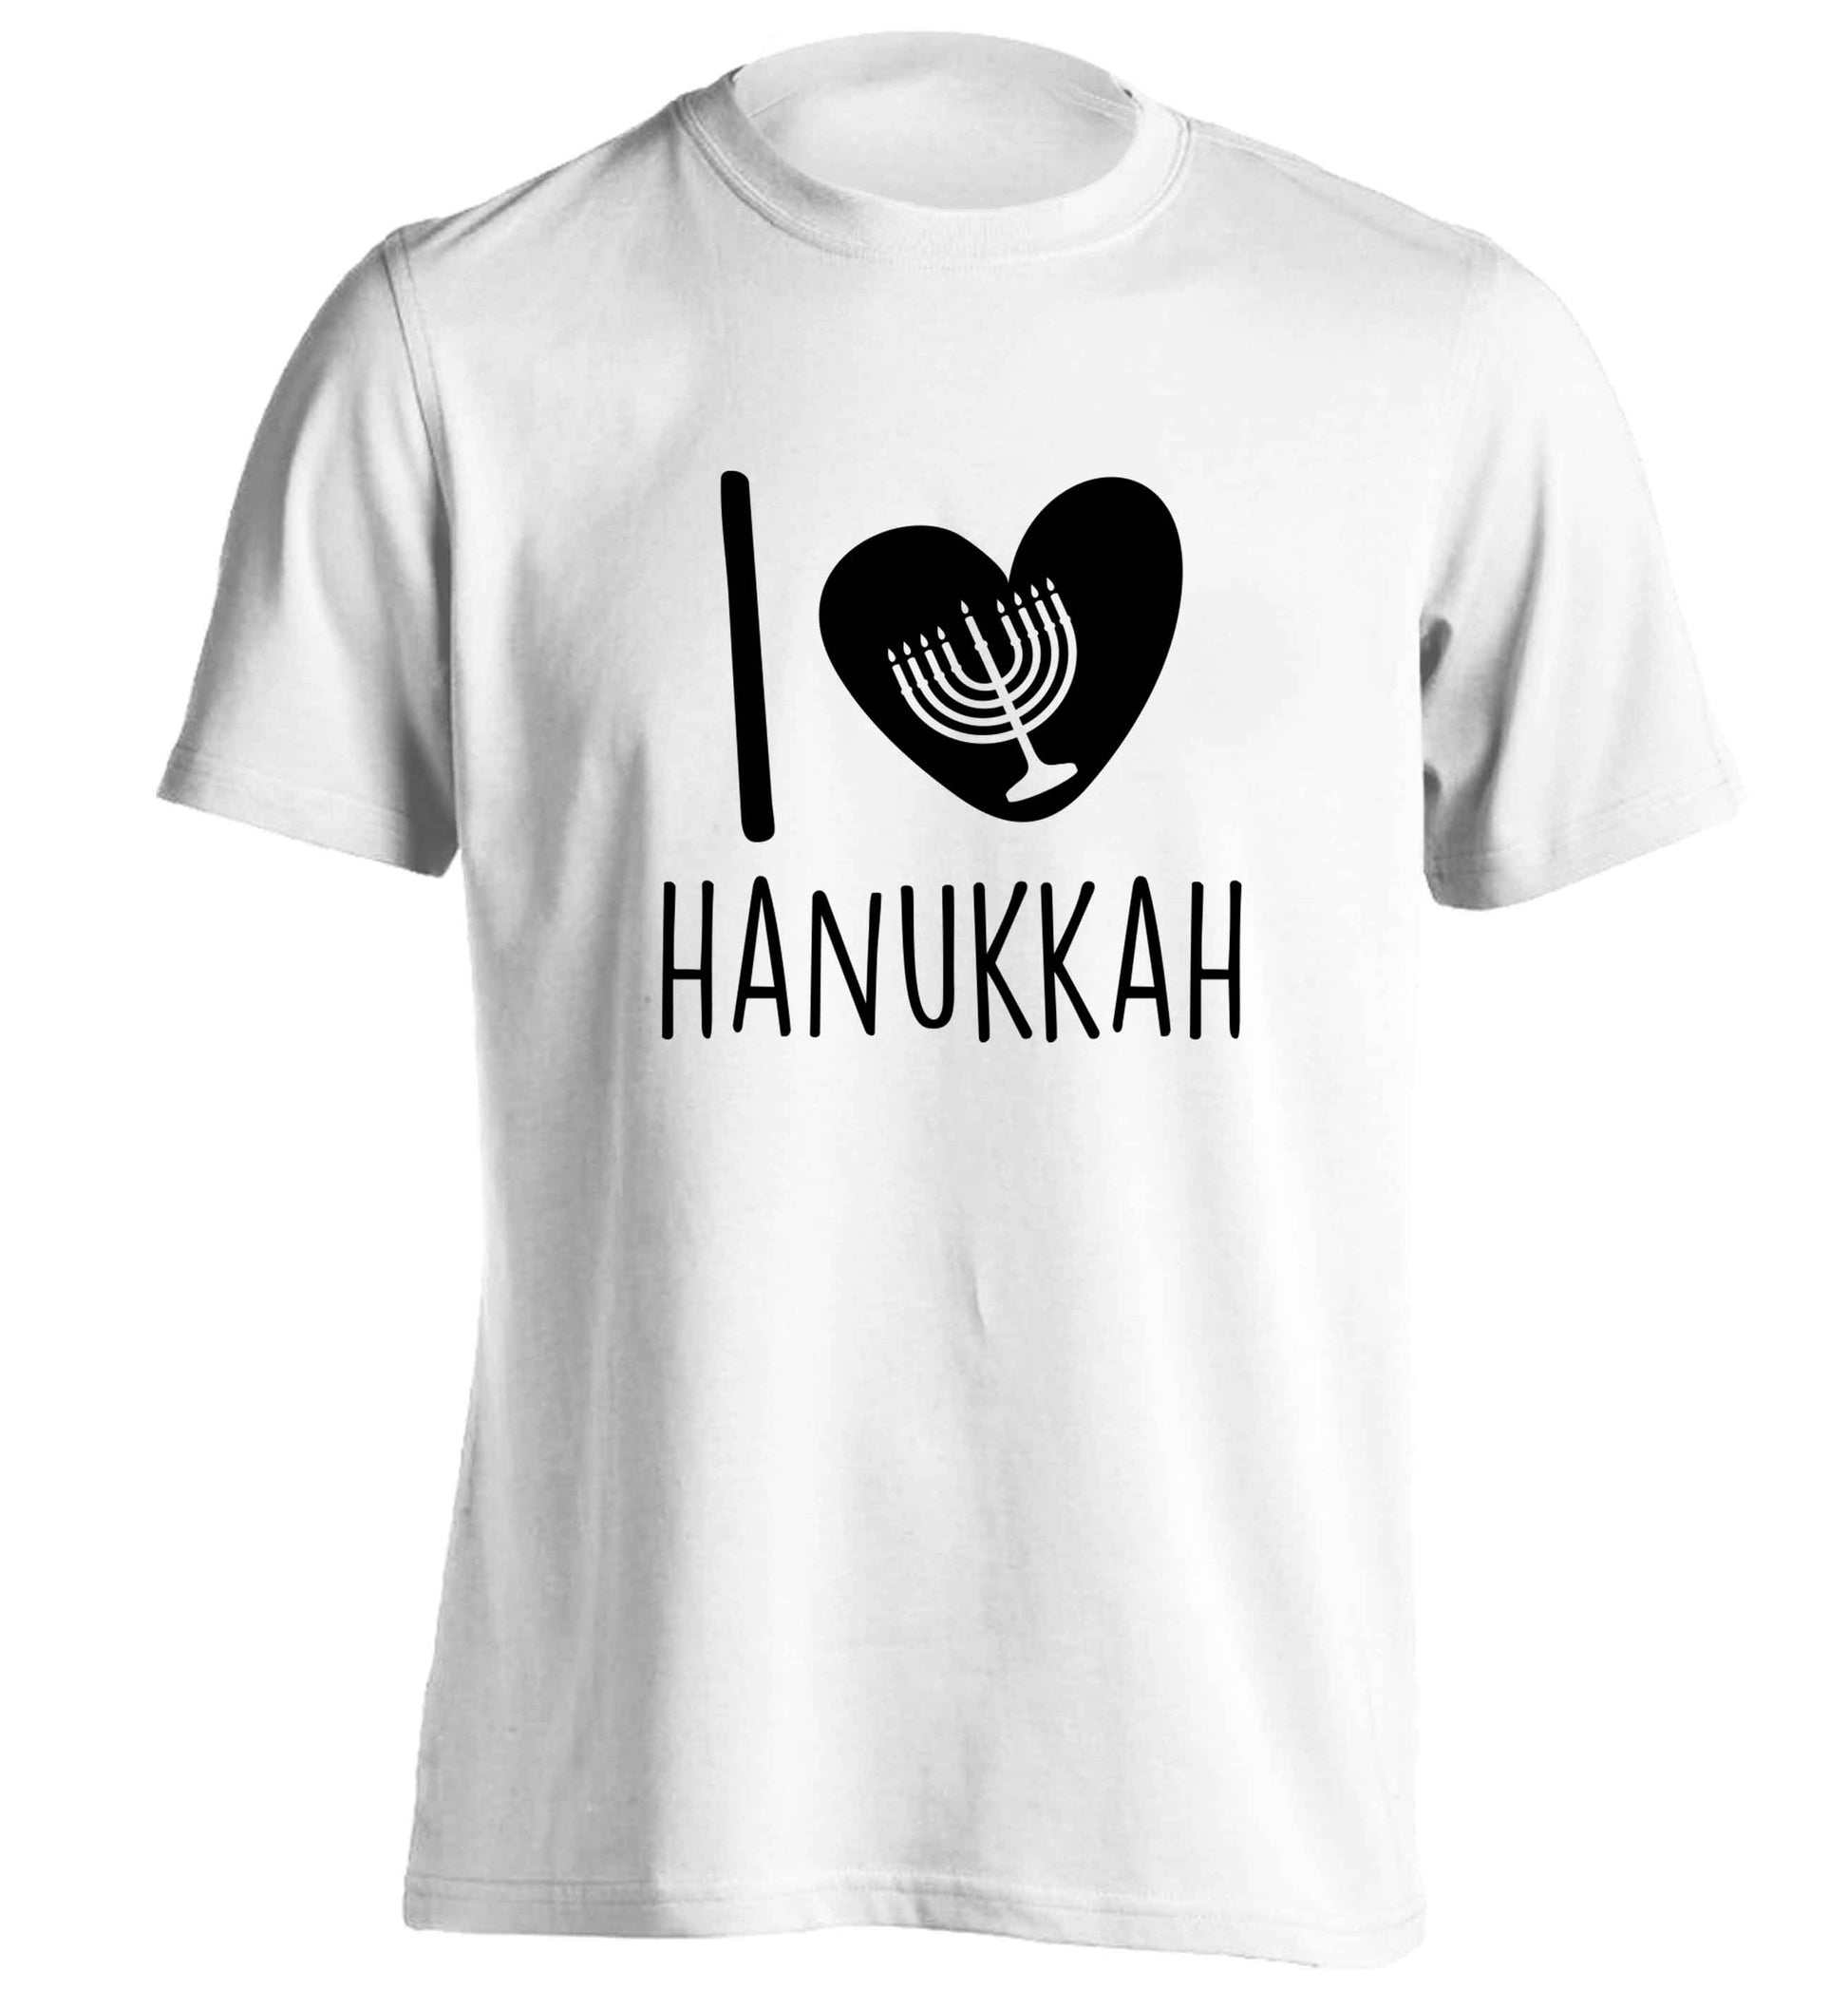 I love hanukkah adults unisex white Tshirt 2XL